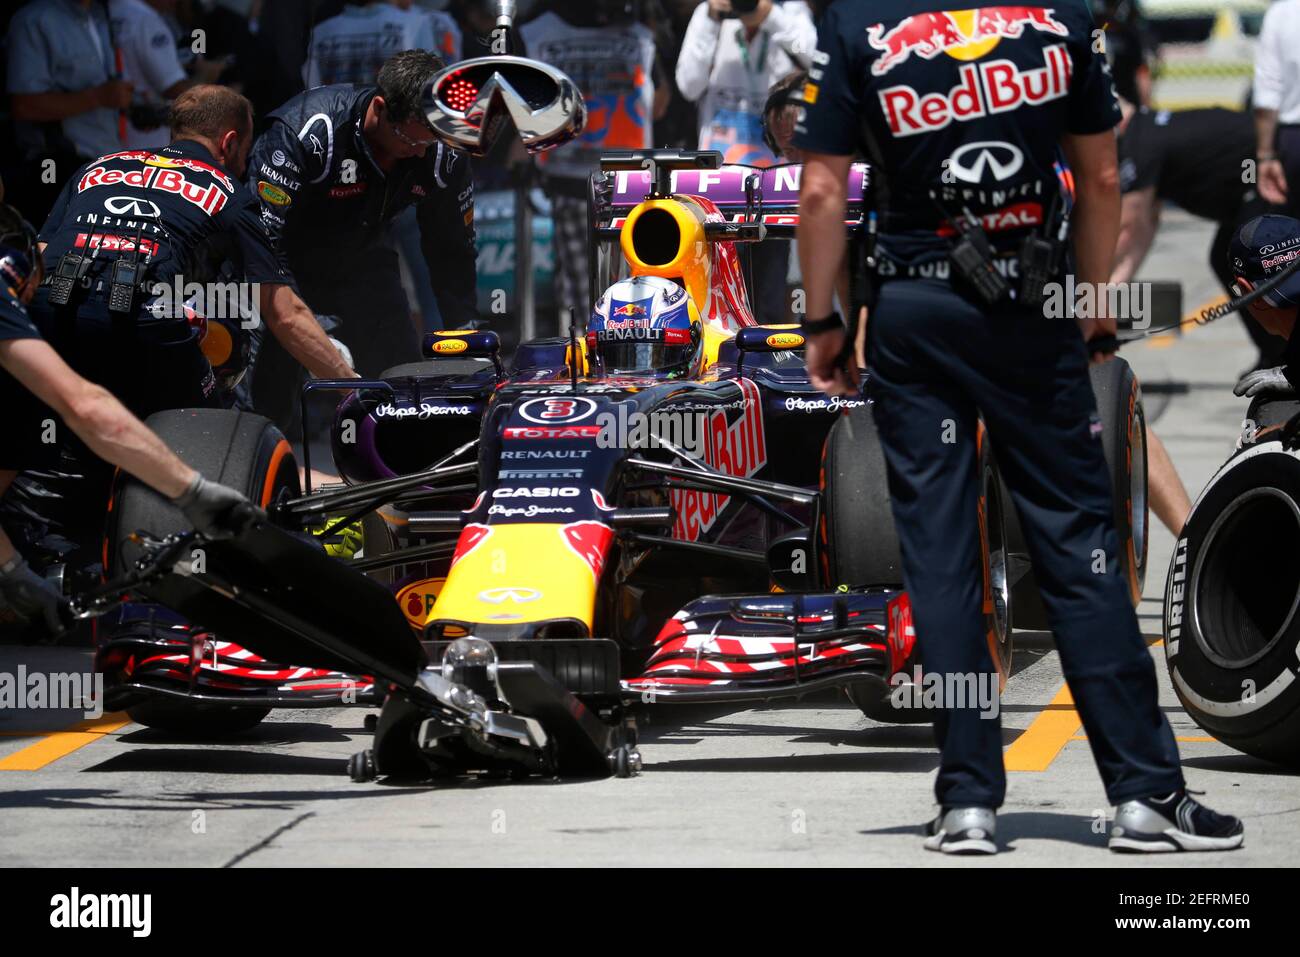 Formula One - F1 - Malaysian Grand Prix 2015 - Sepang International Circuit, Kuala Lumpur, Malaysia - 28/3/15  Red Bull's Daniel Ricciardo changes tires during practice  Reuters / Olivia Harris  Livepic Stock Photo